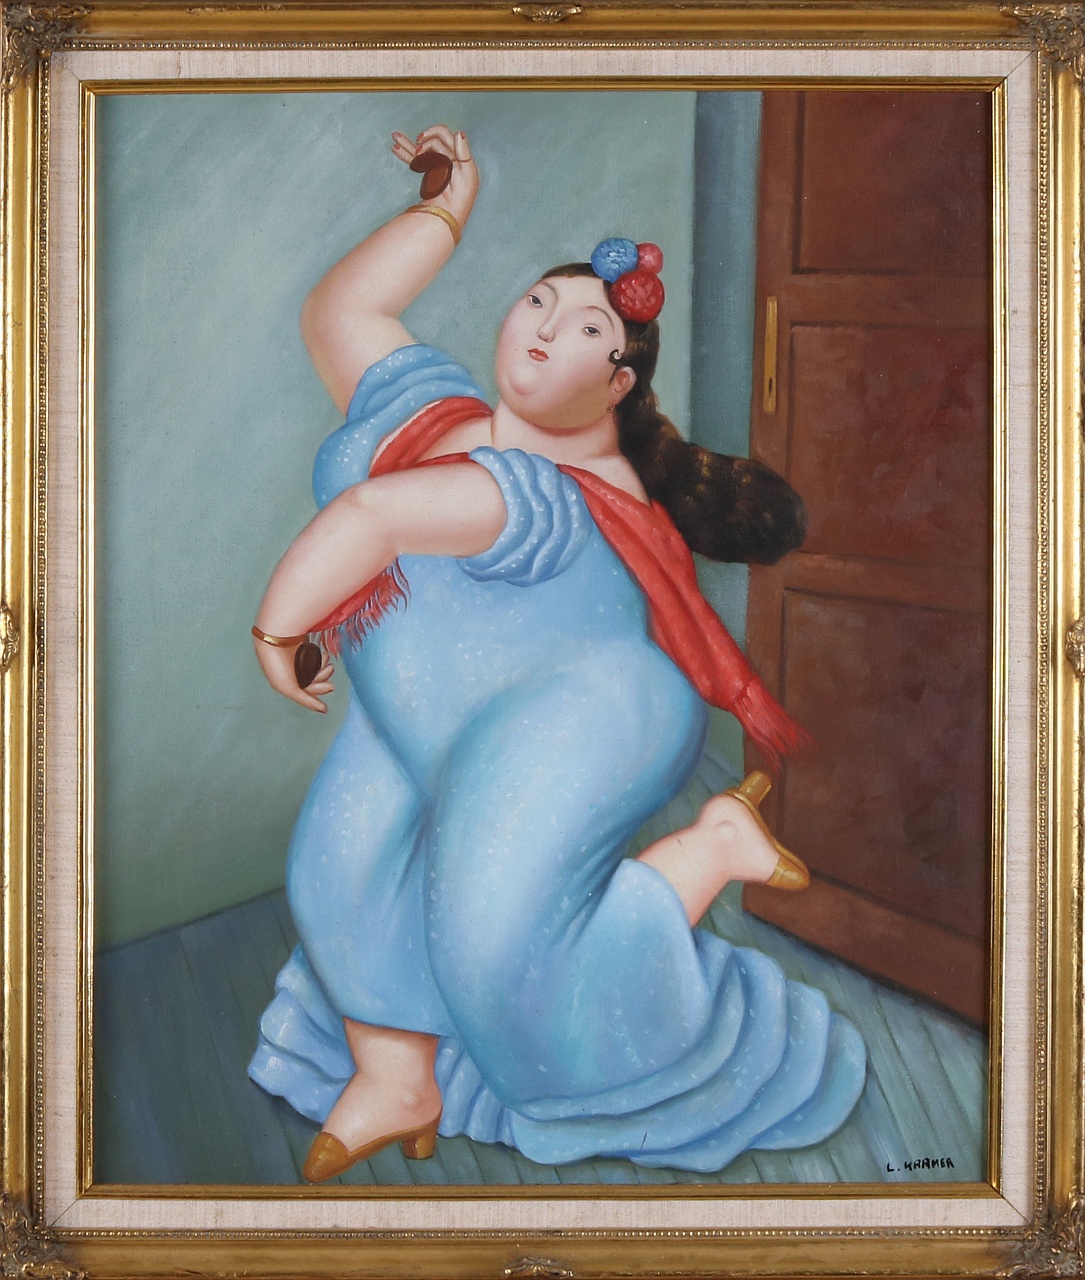 L. Kramer, Dikke dansende vrouw